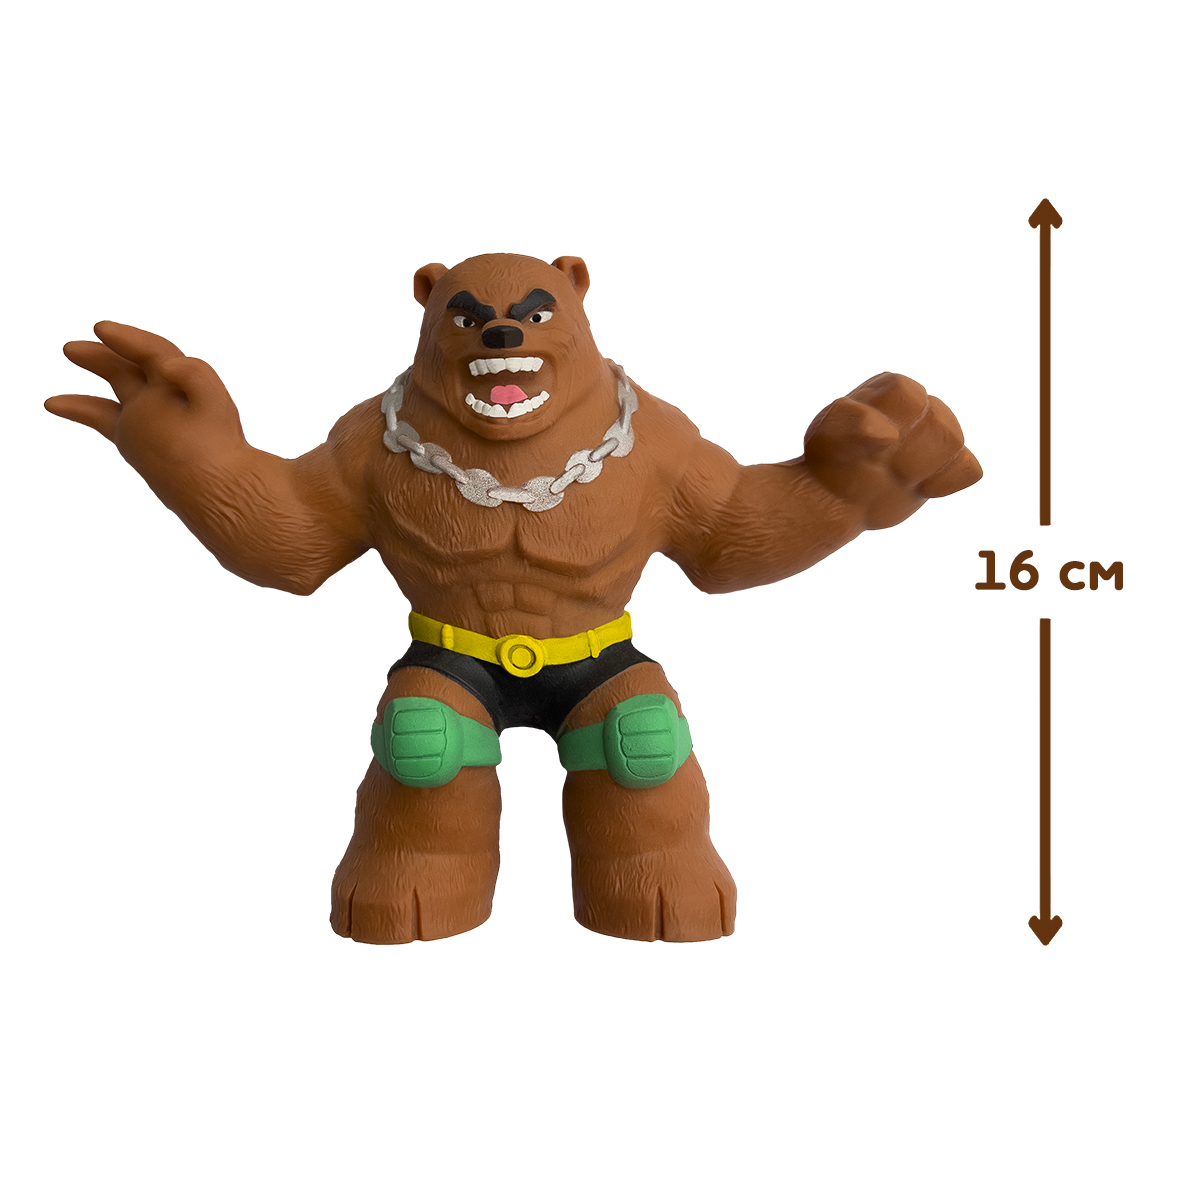 Стретч-игрушка Elastikorps серии Fighter Медведь берн (245) - фото 2